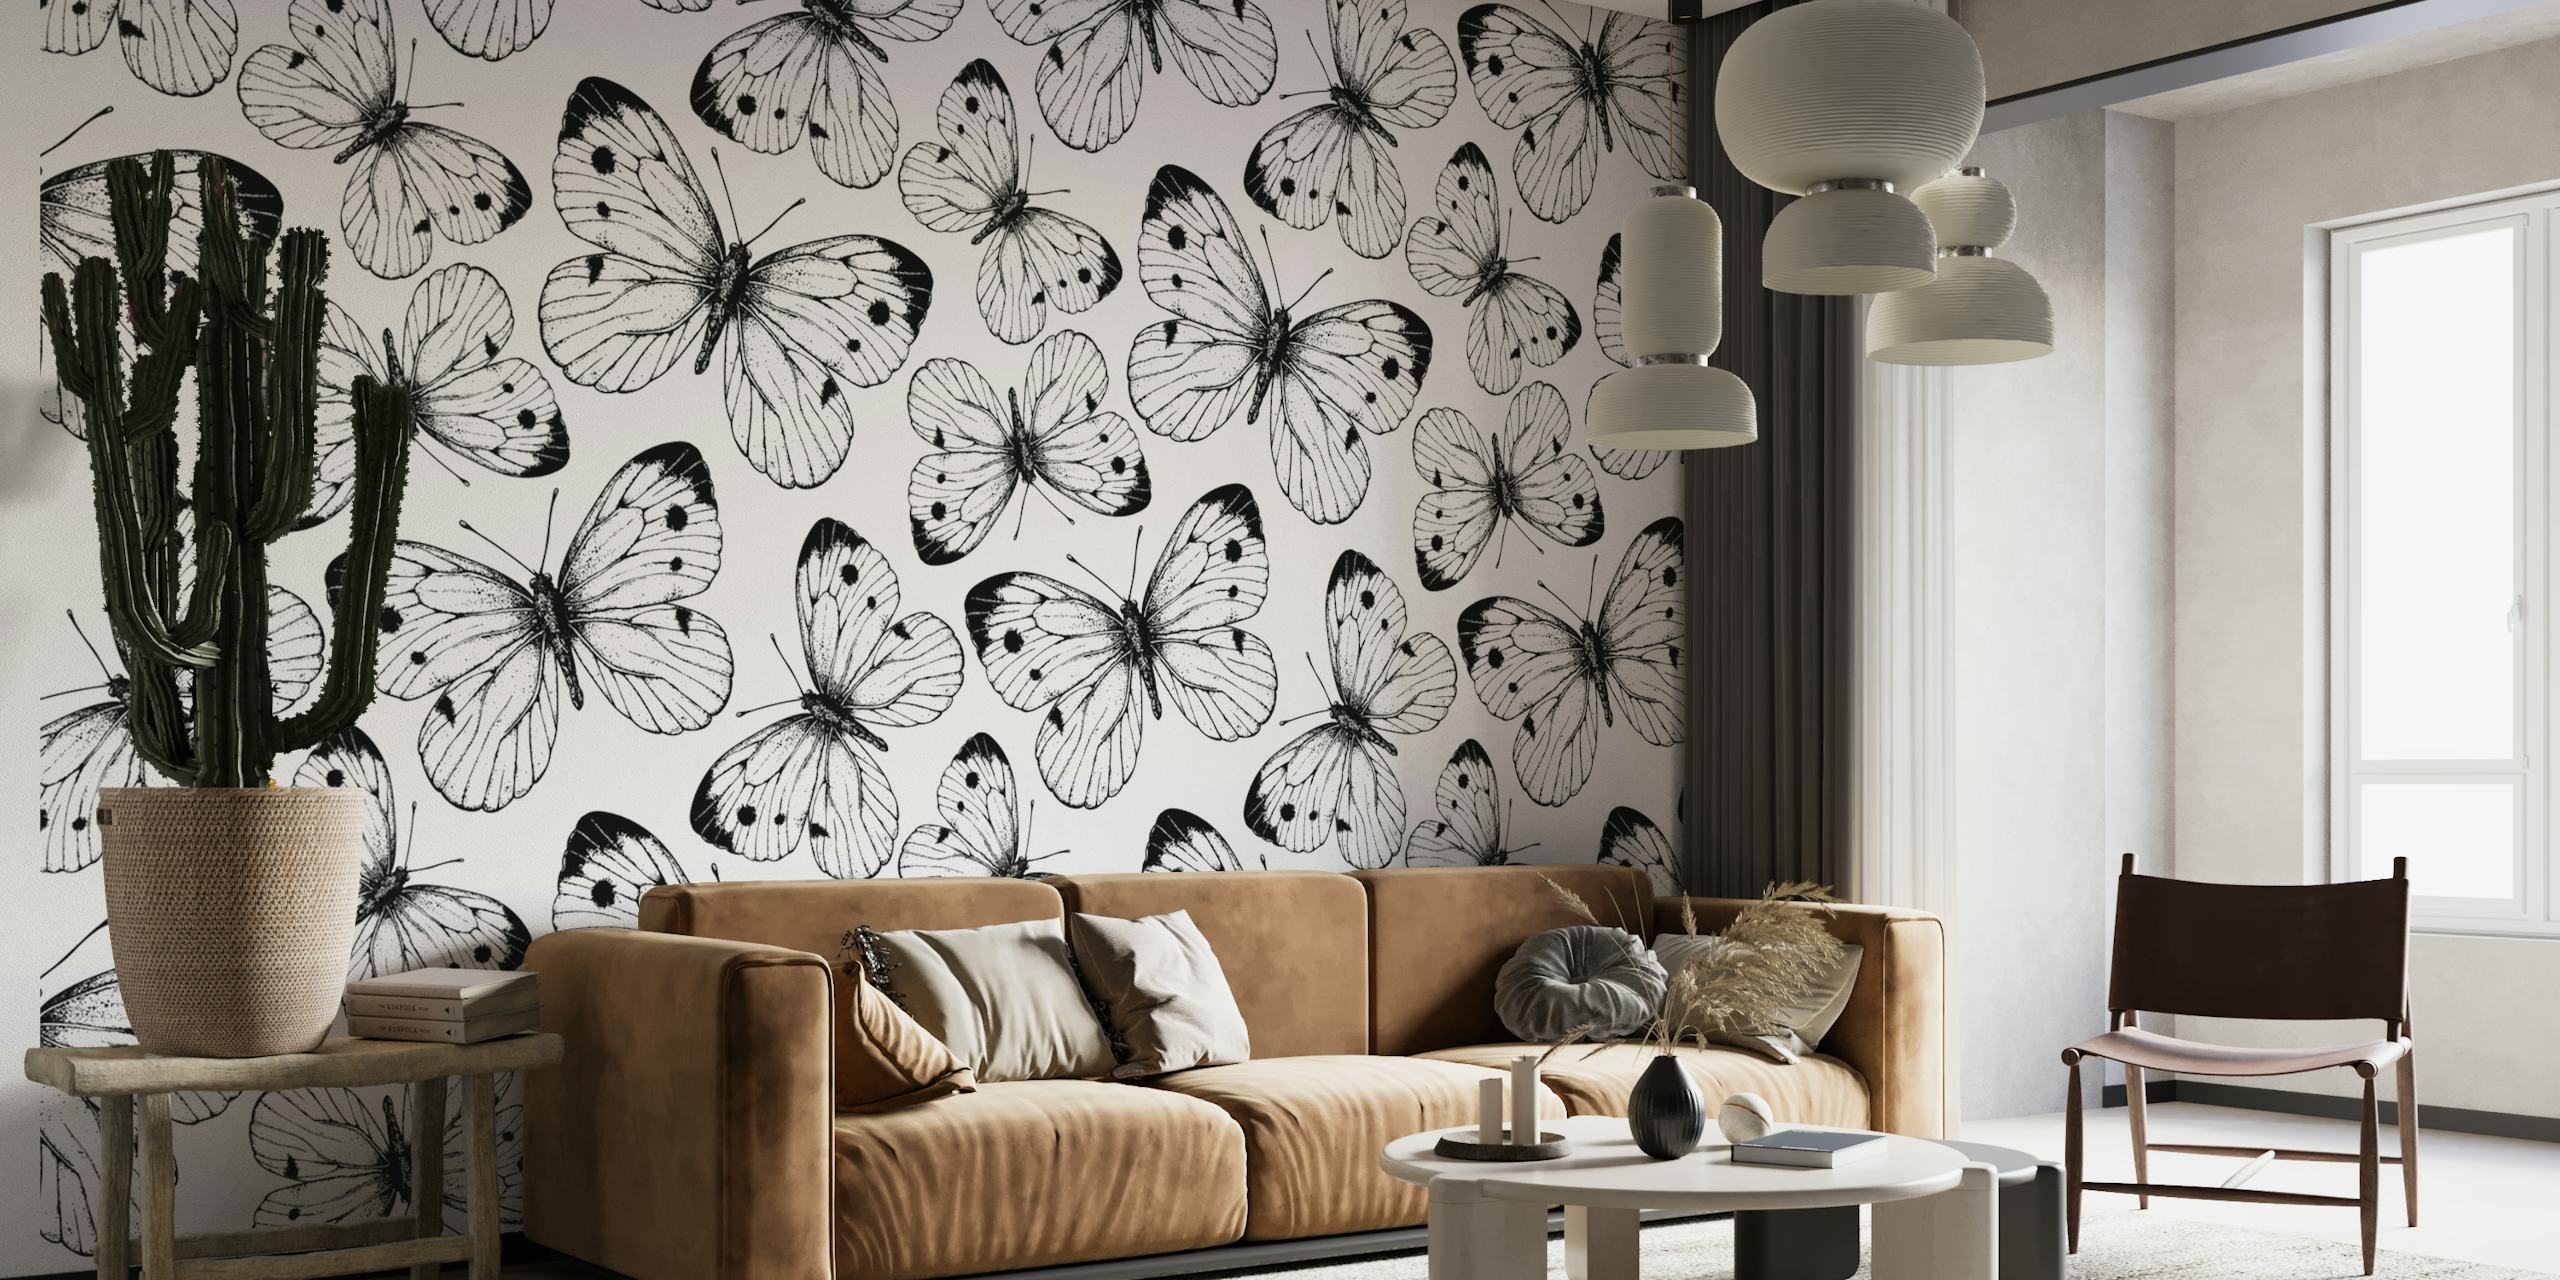 Cabbage butterfly pattern 3 wallpaper